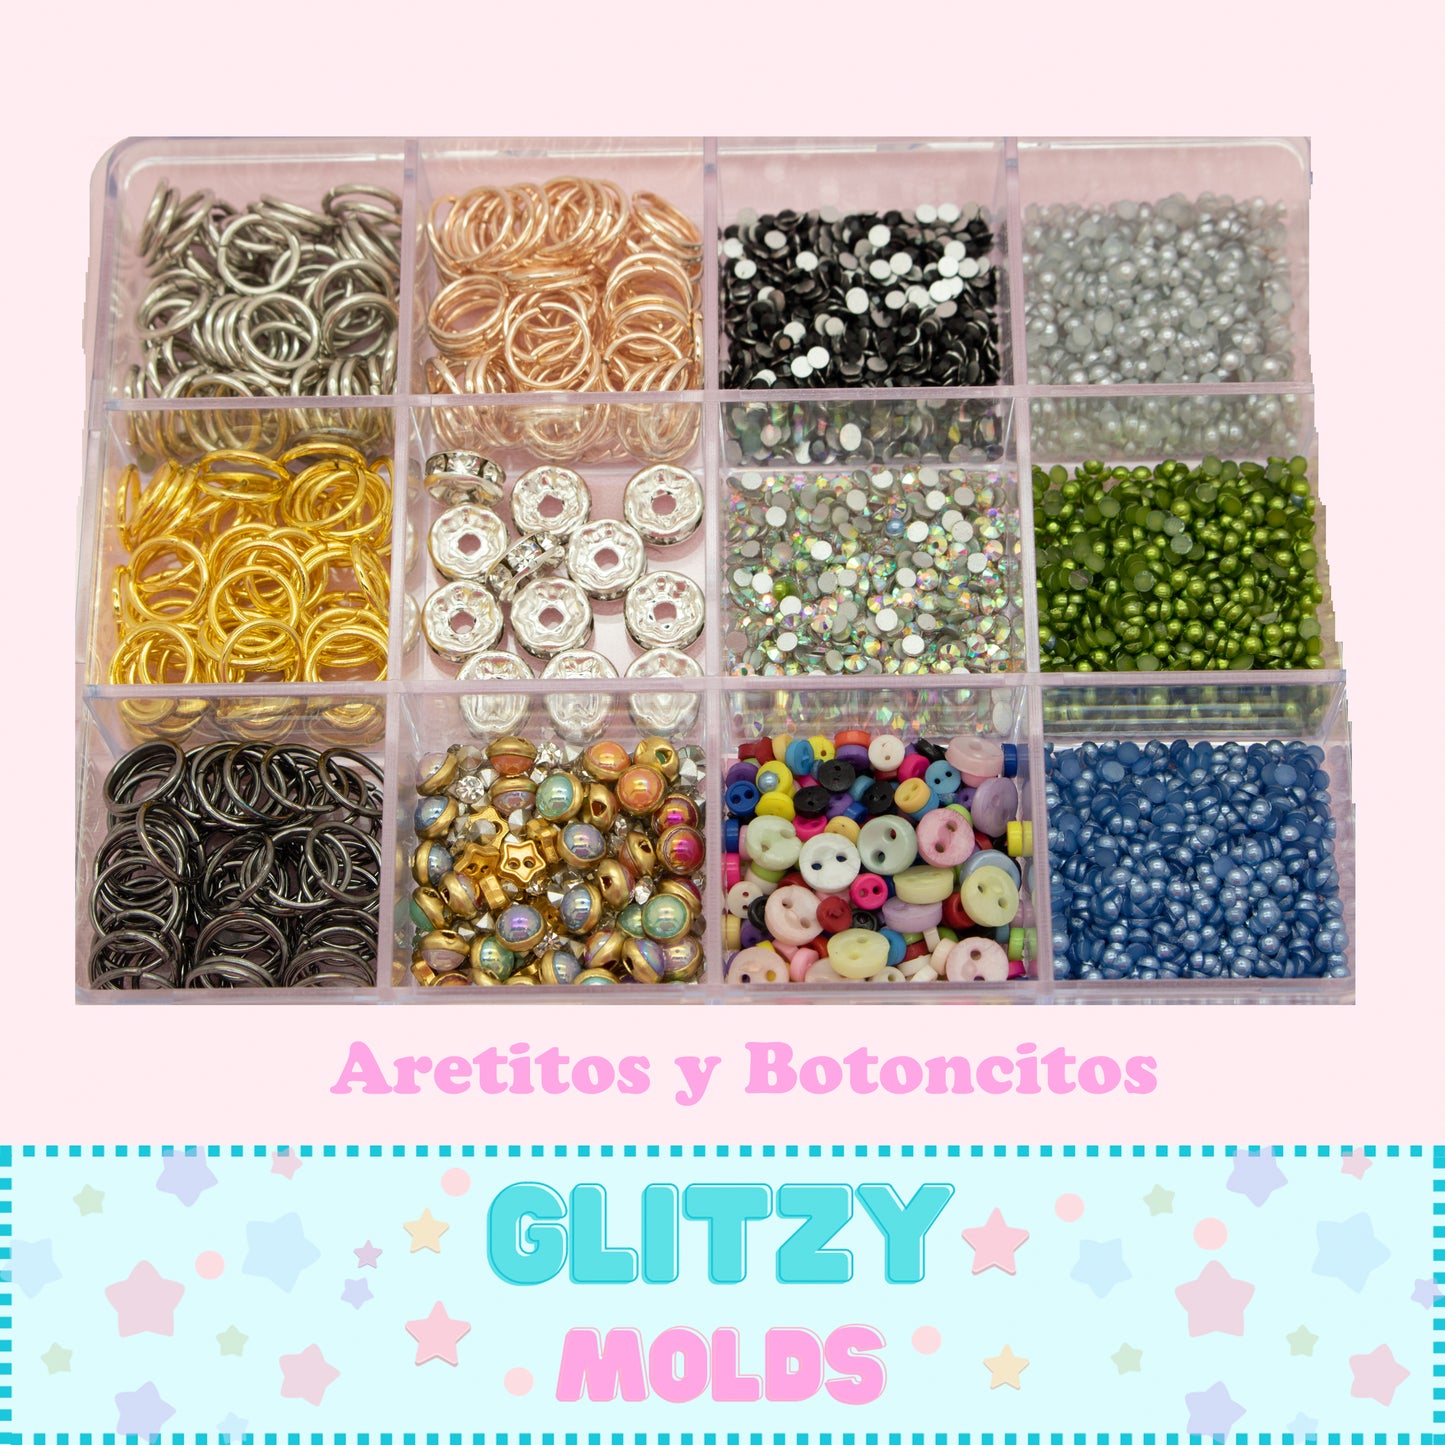 Micro Buttons and Earrings, Mixed Accessories Box, Micro Botoncitos y Aretitos, Cajita Mixta